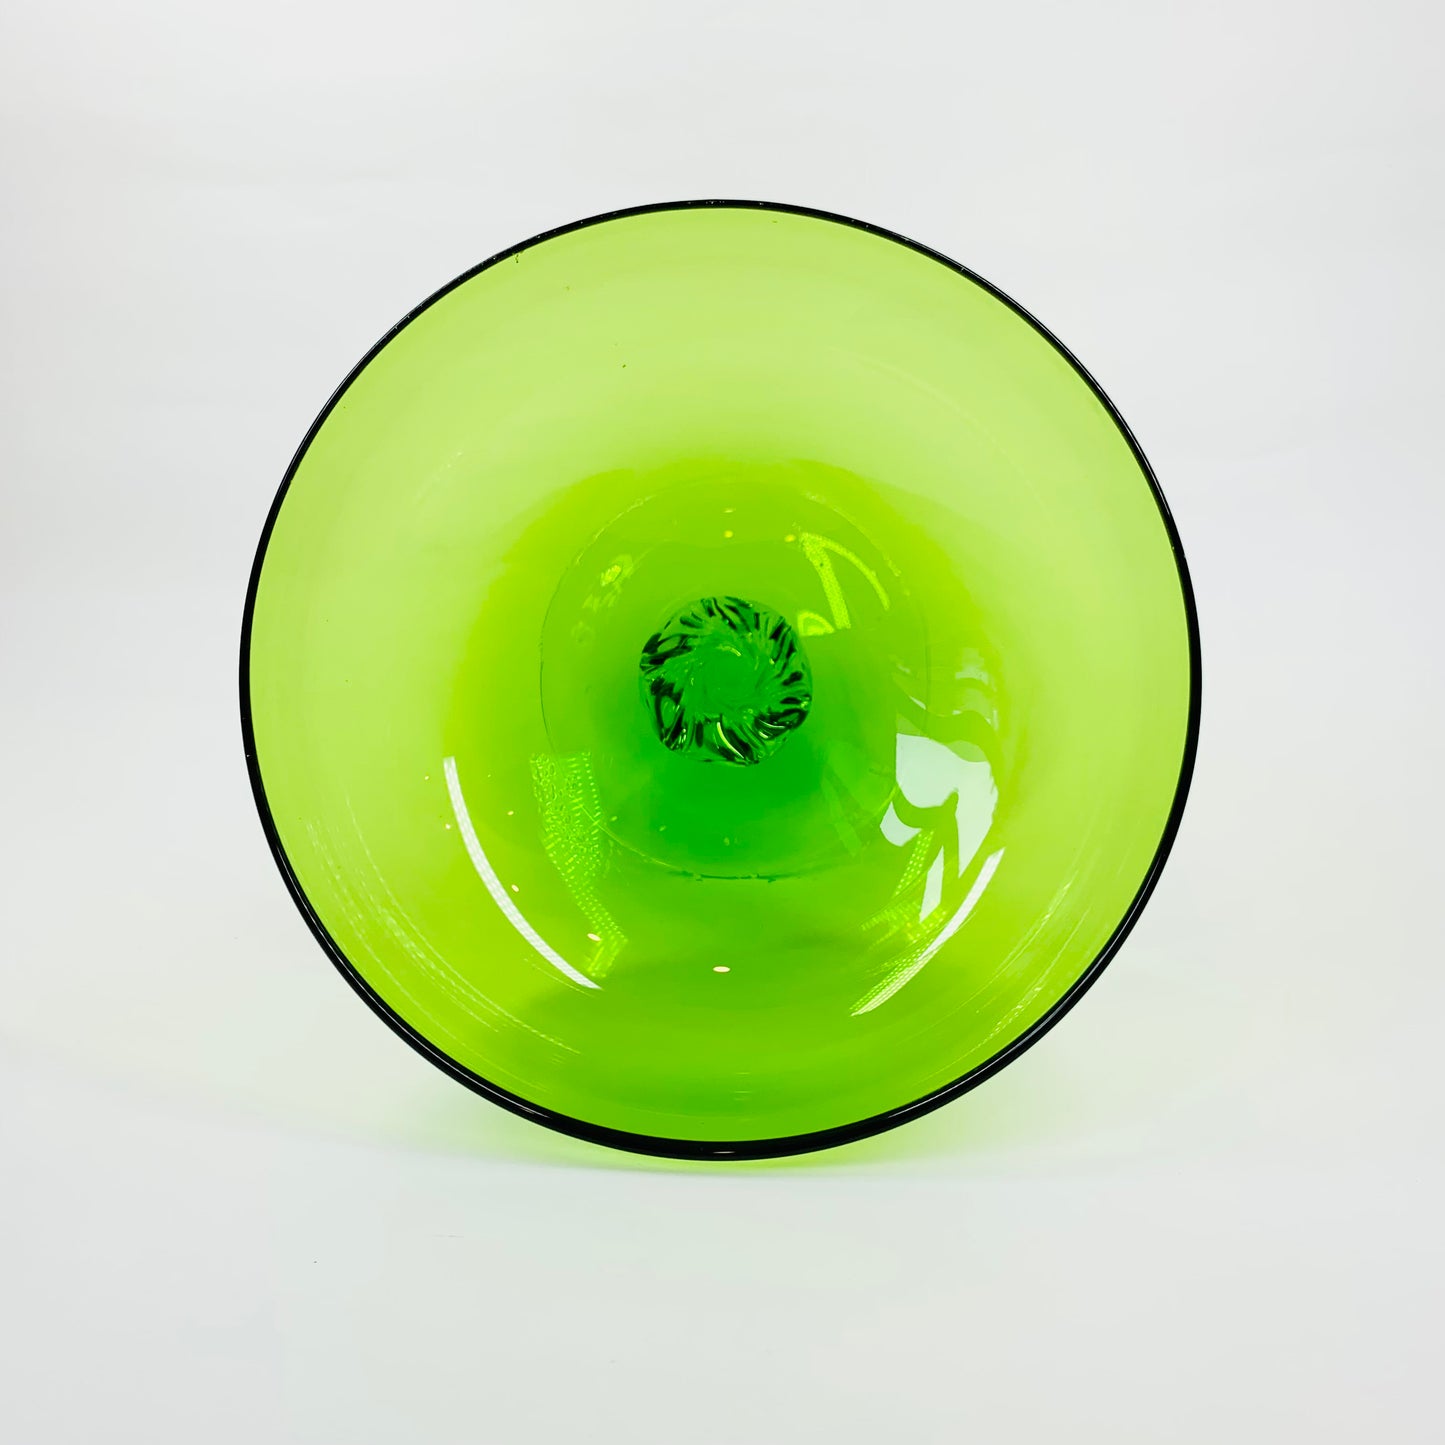 GREEN GLASS COMPORT